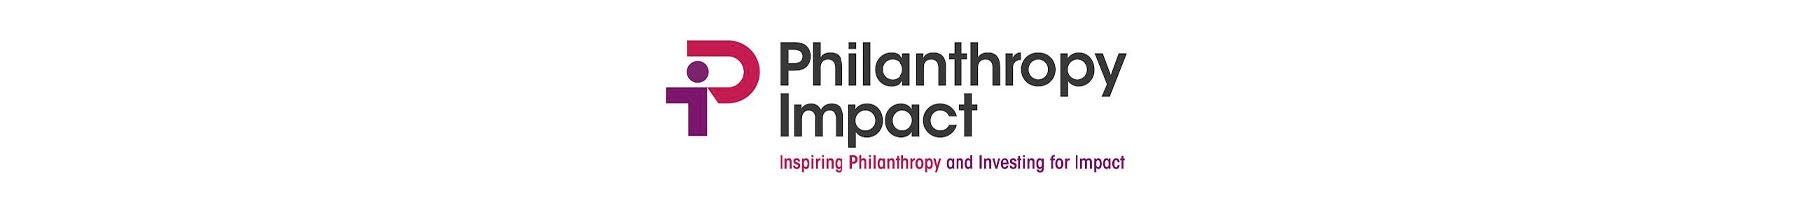 Philanthropy Impact logo